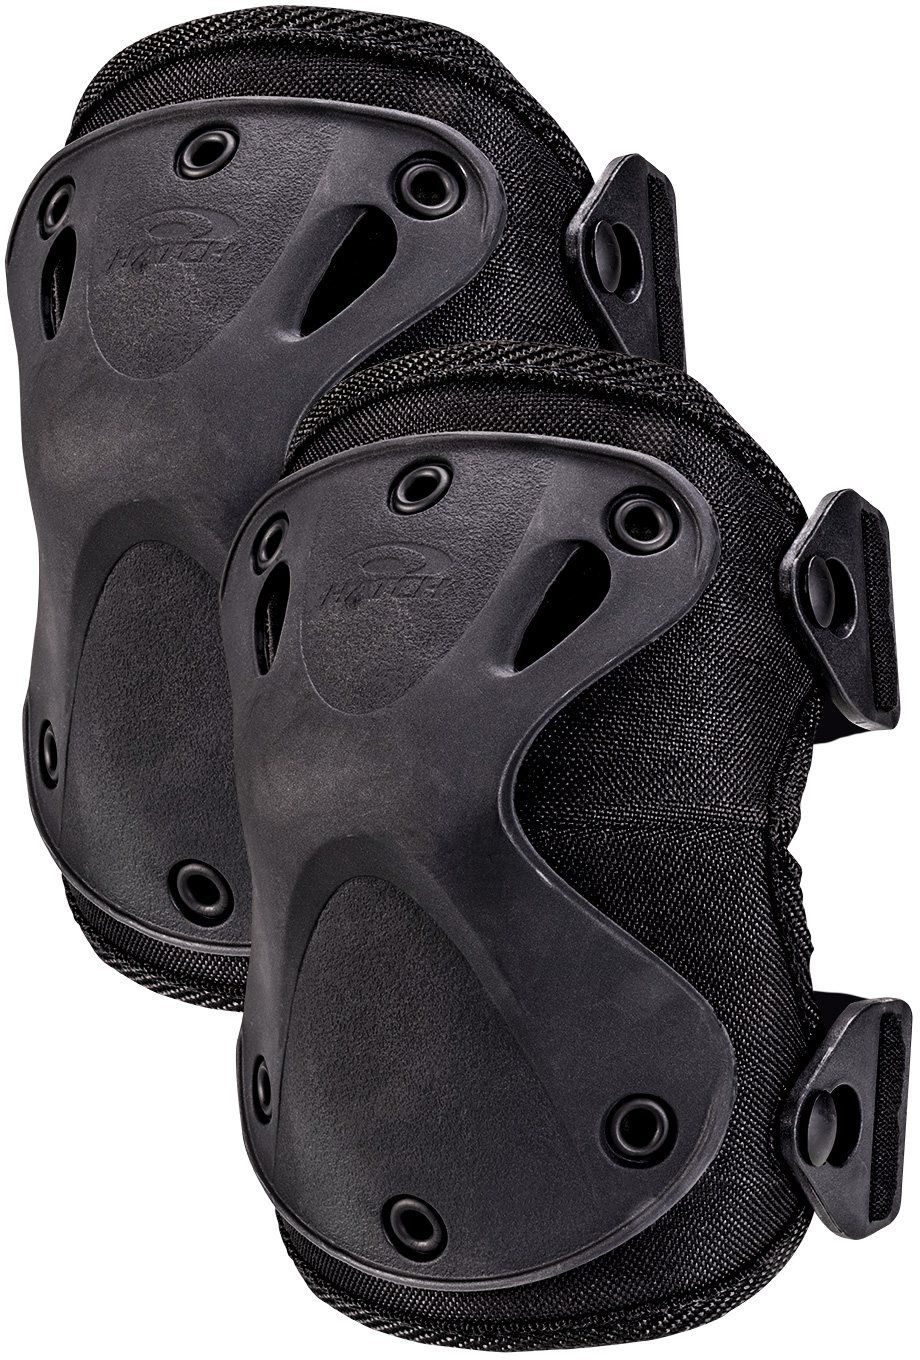 Hatch XTAK Knee Pads Protective Gear Hatch Coyote Tactical Gear Supplier Tactical Distributors Australia